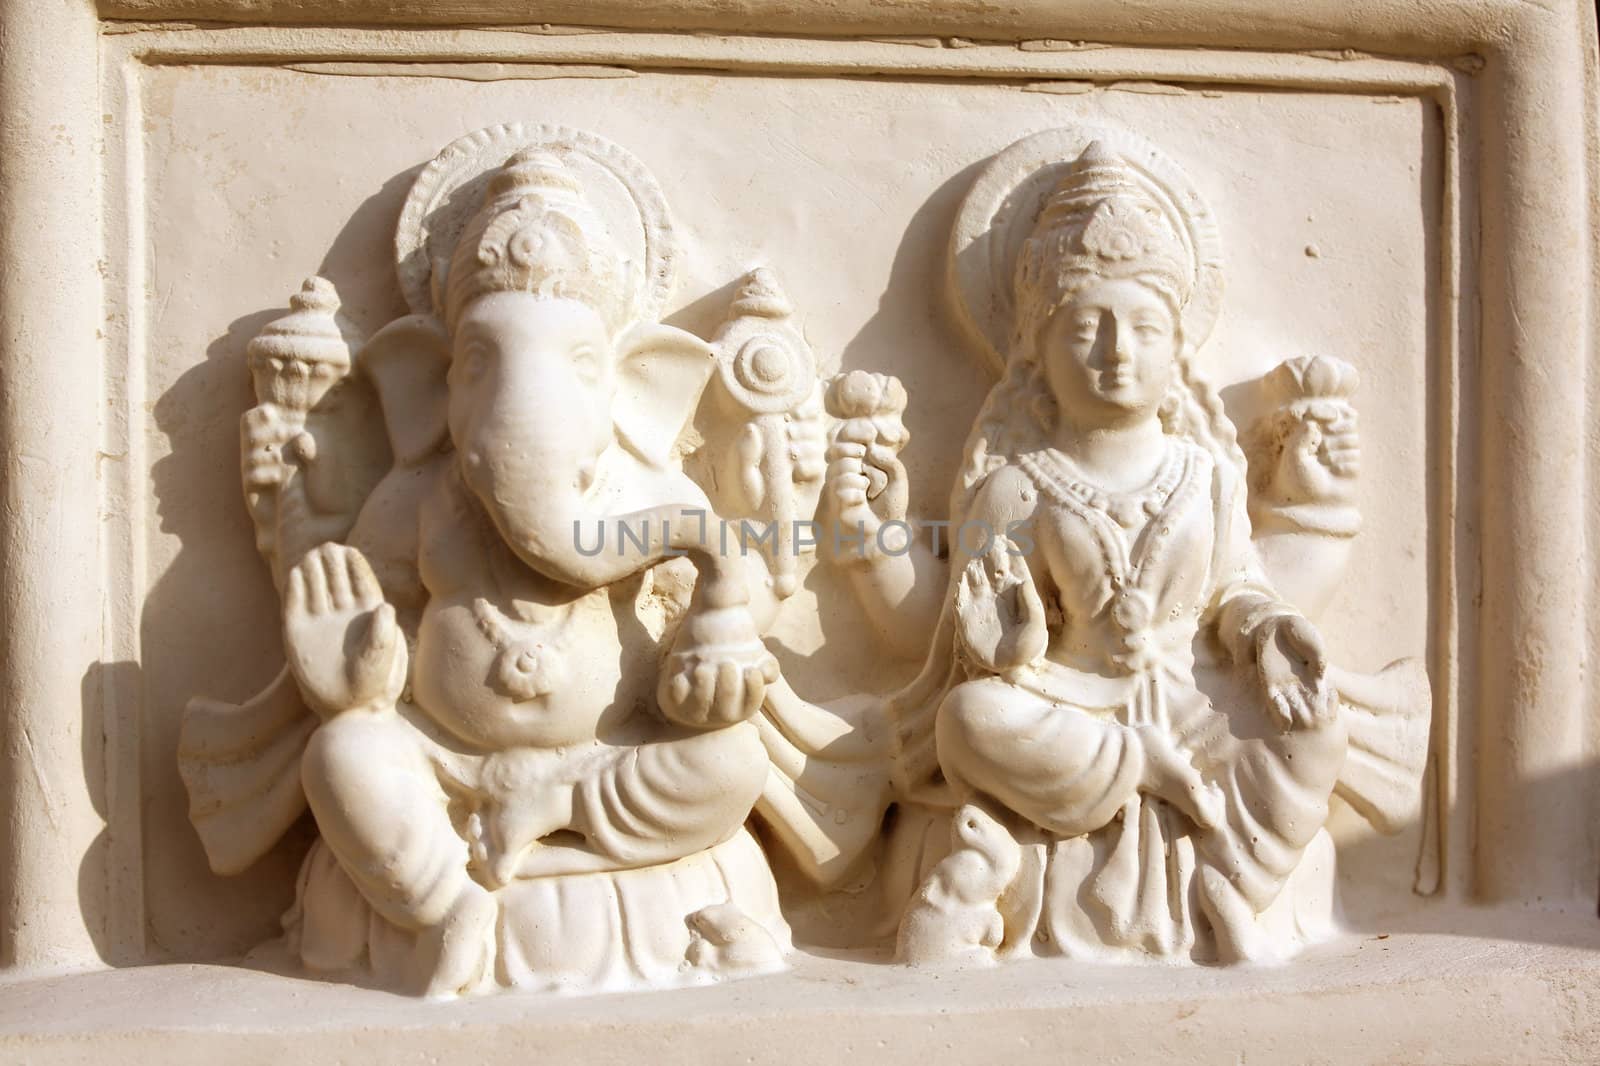 A background of a clay art of hindu god Ganesha(The Elephant God) and Goddess Laxmi (Goddess of wealth).